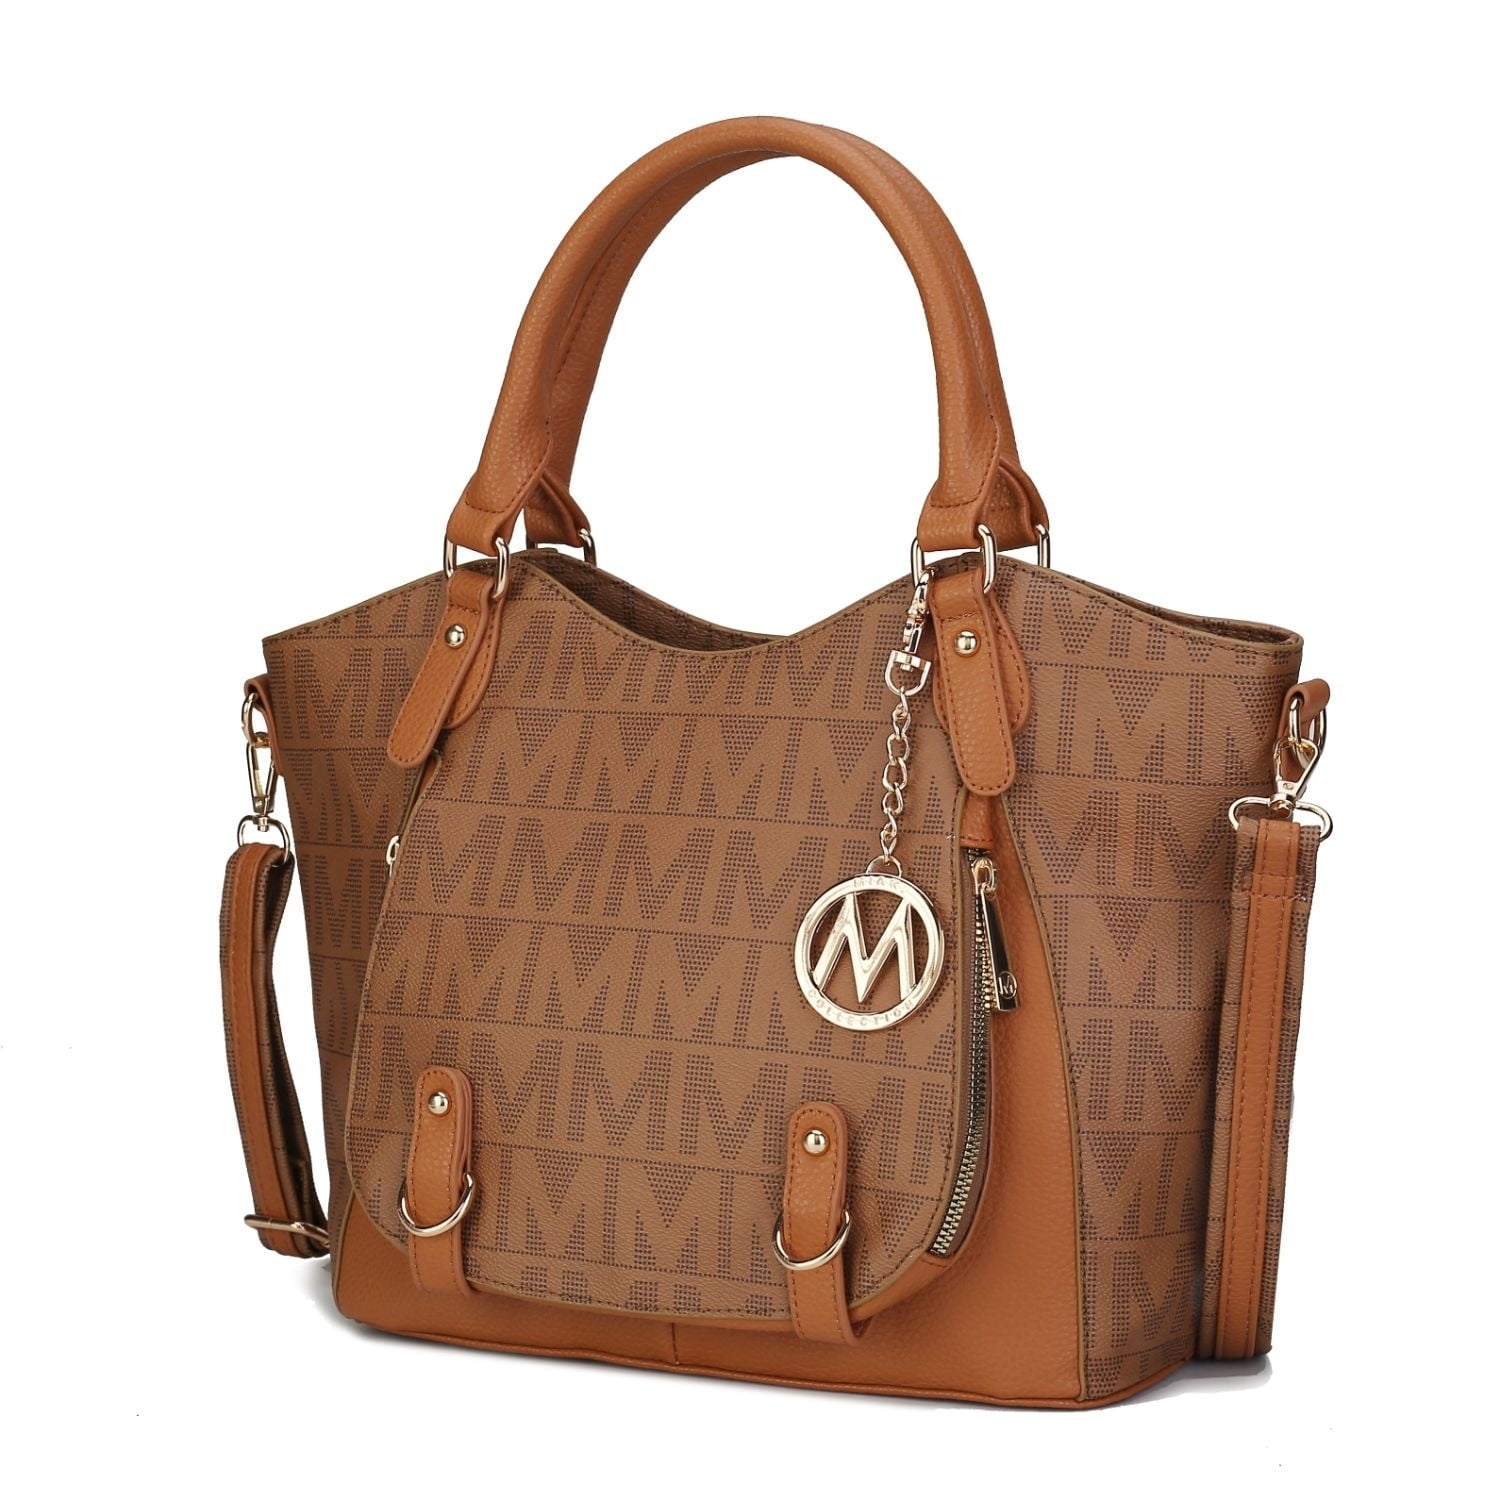 Handbags | Handbag Brand Name Caprese | Freeup